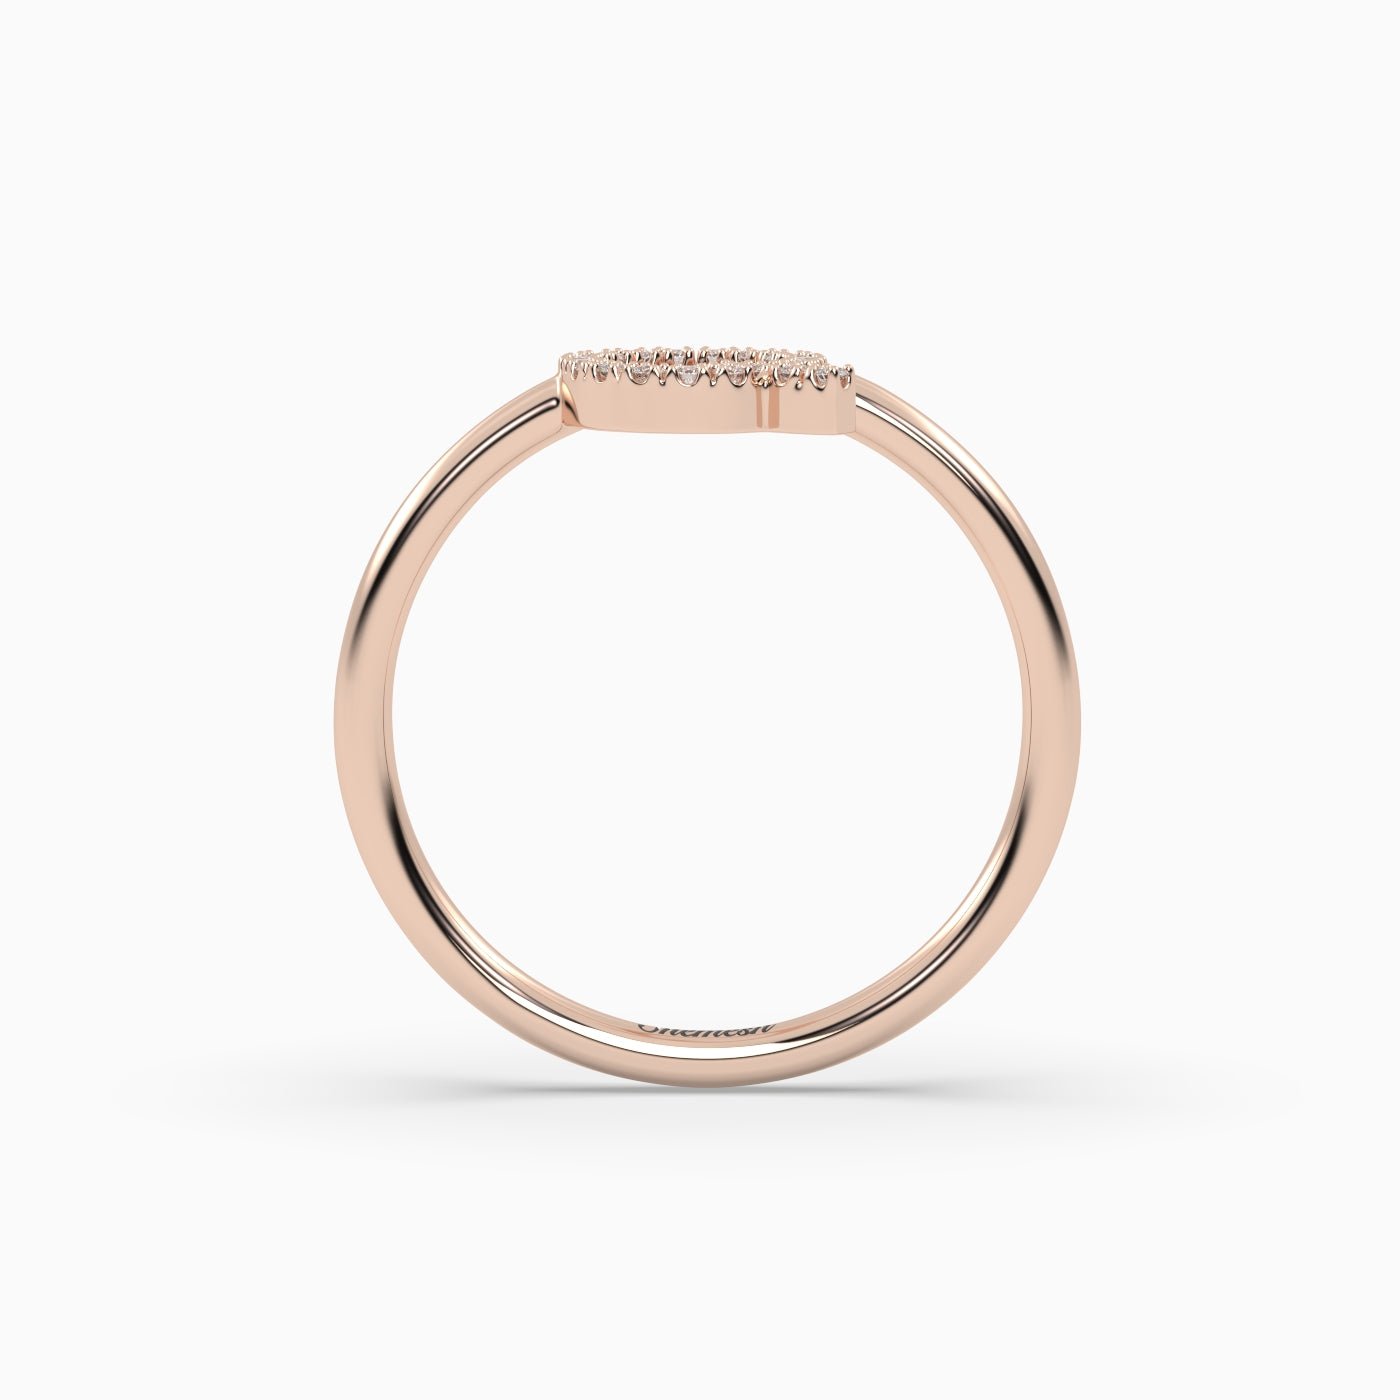 18K Gold "Q" Initial Ring - shemesh_diamonds